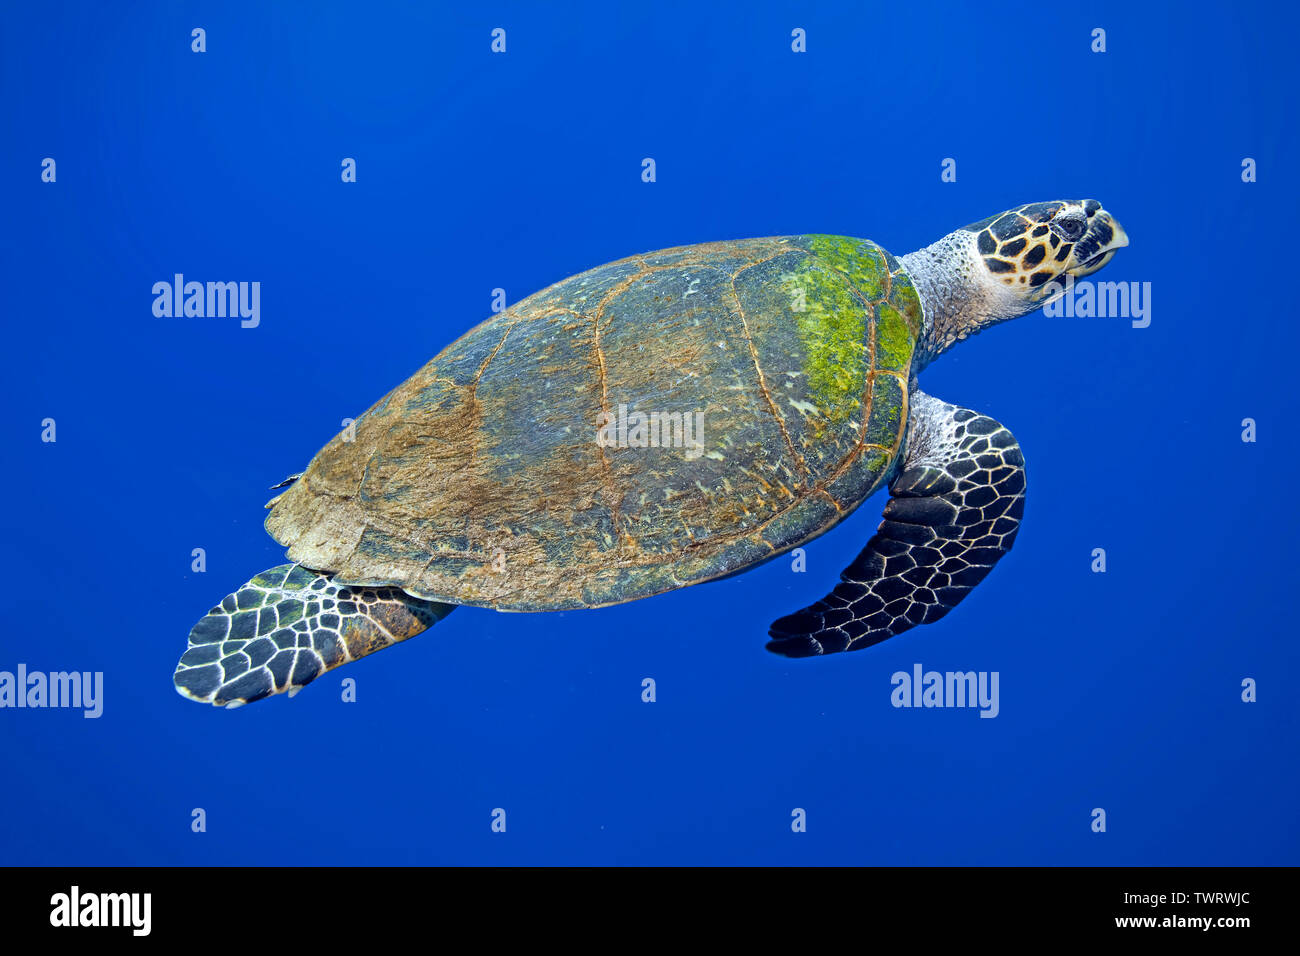 La tortuga carey (Eretmochelys imbricata) nadando en agua azul, Marsa Alam, Egipto Foto de stock